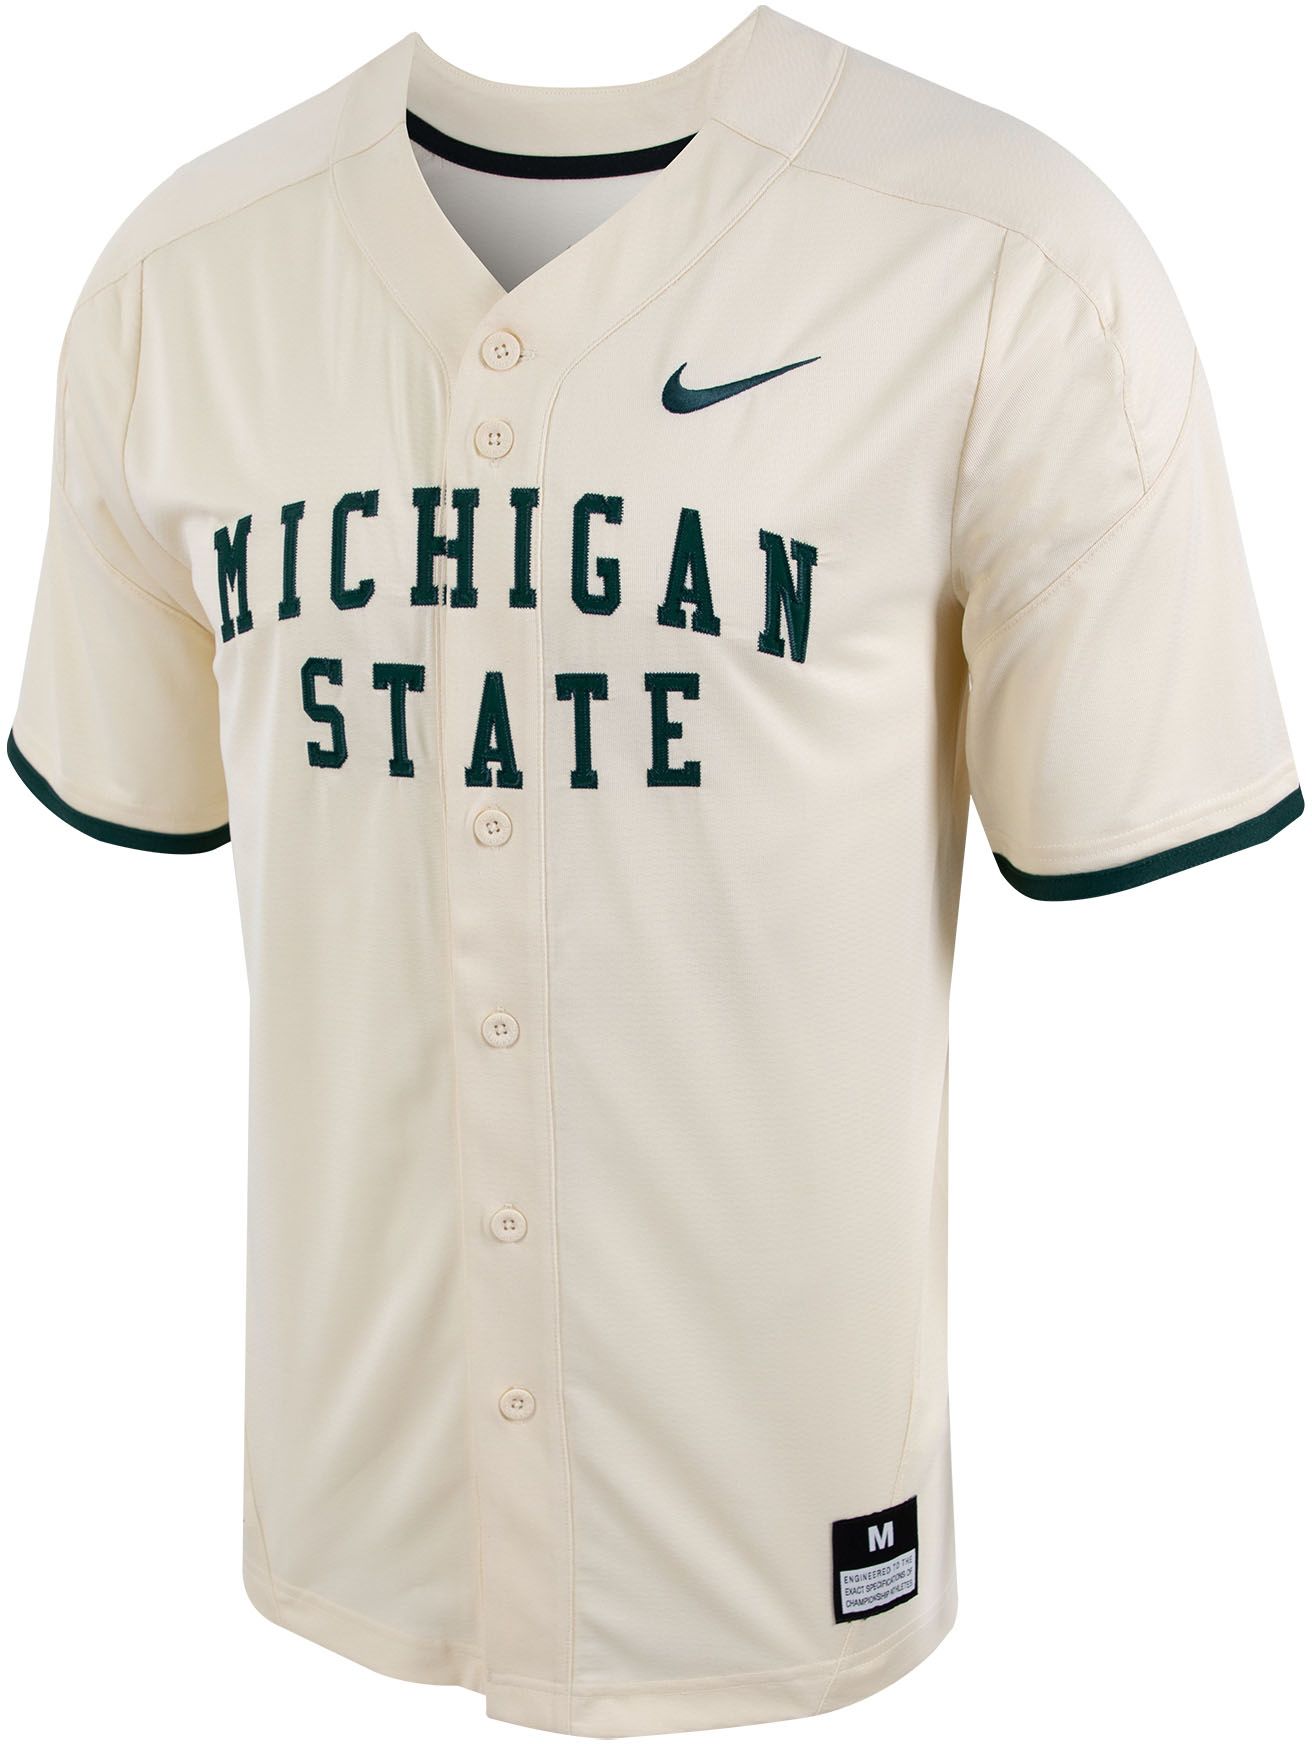 Michigan State Spartans baseball championship jersey